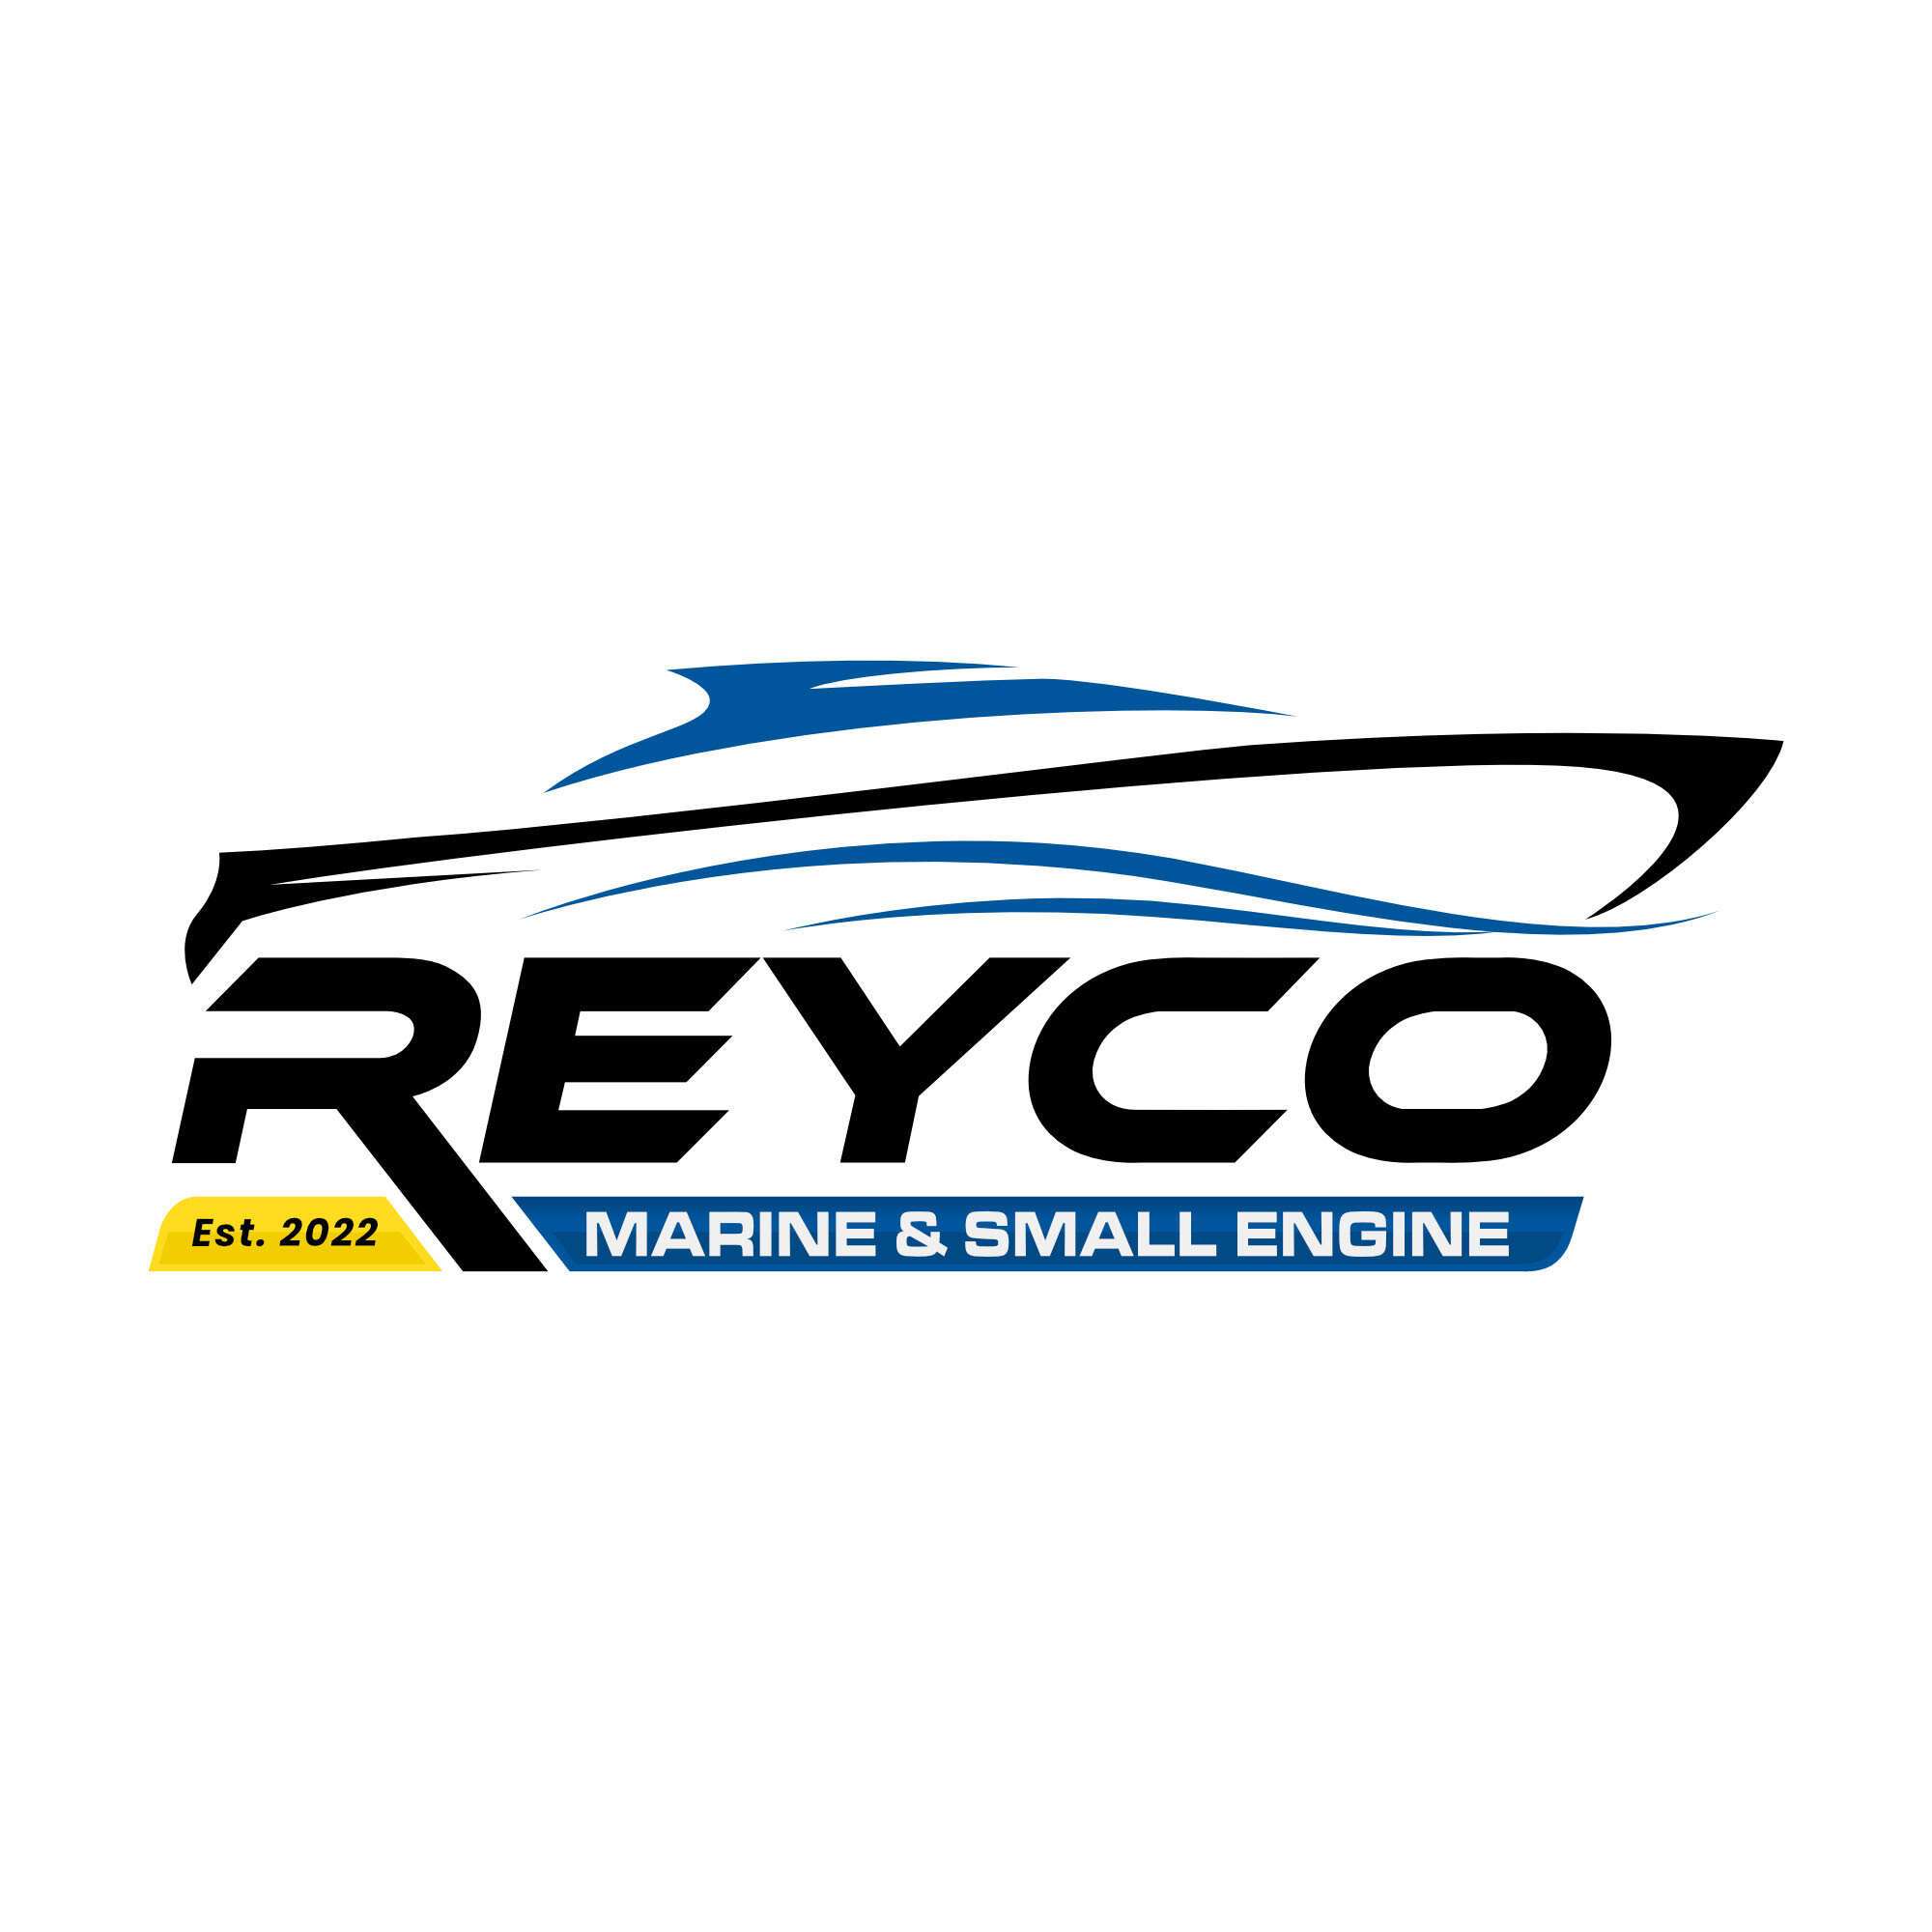 Reyco Marine & Small Engine